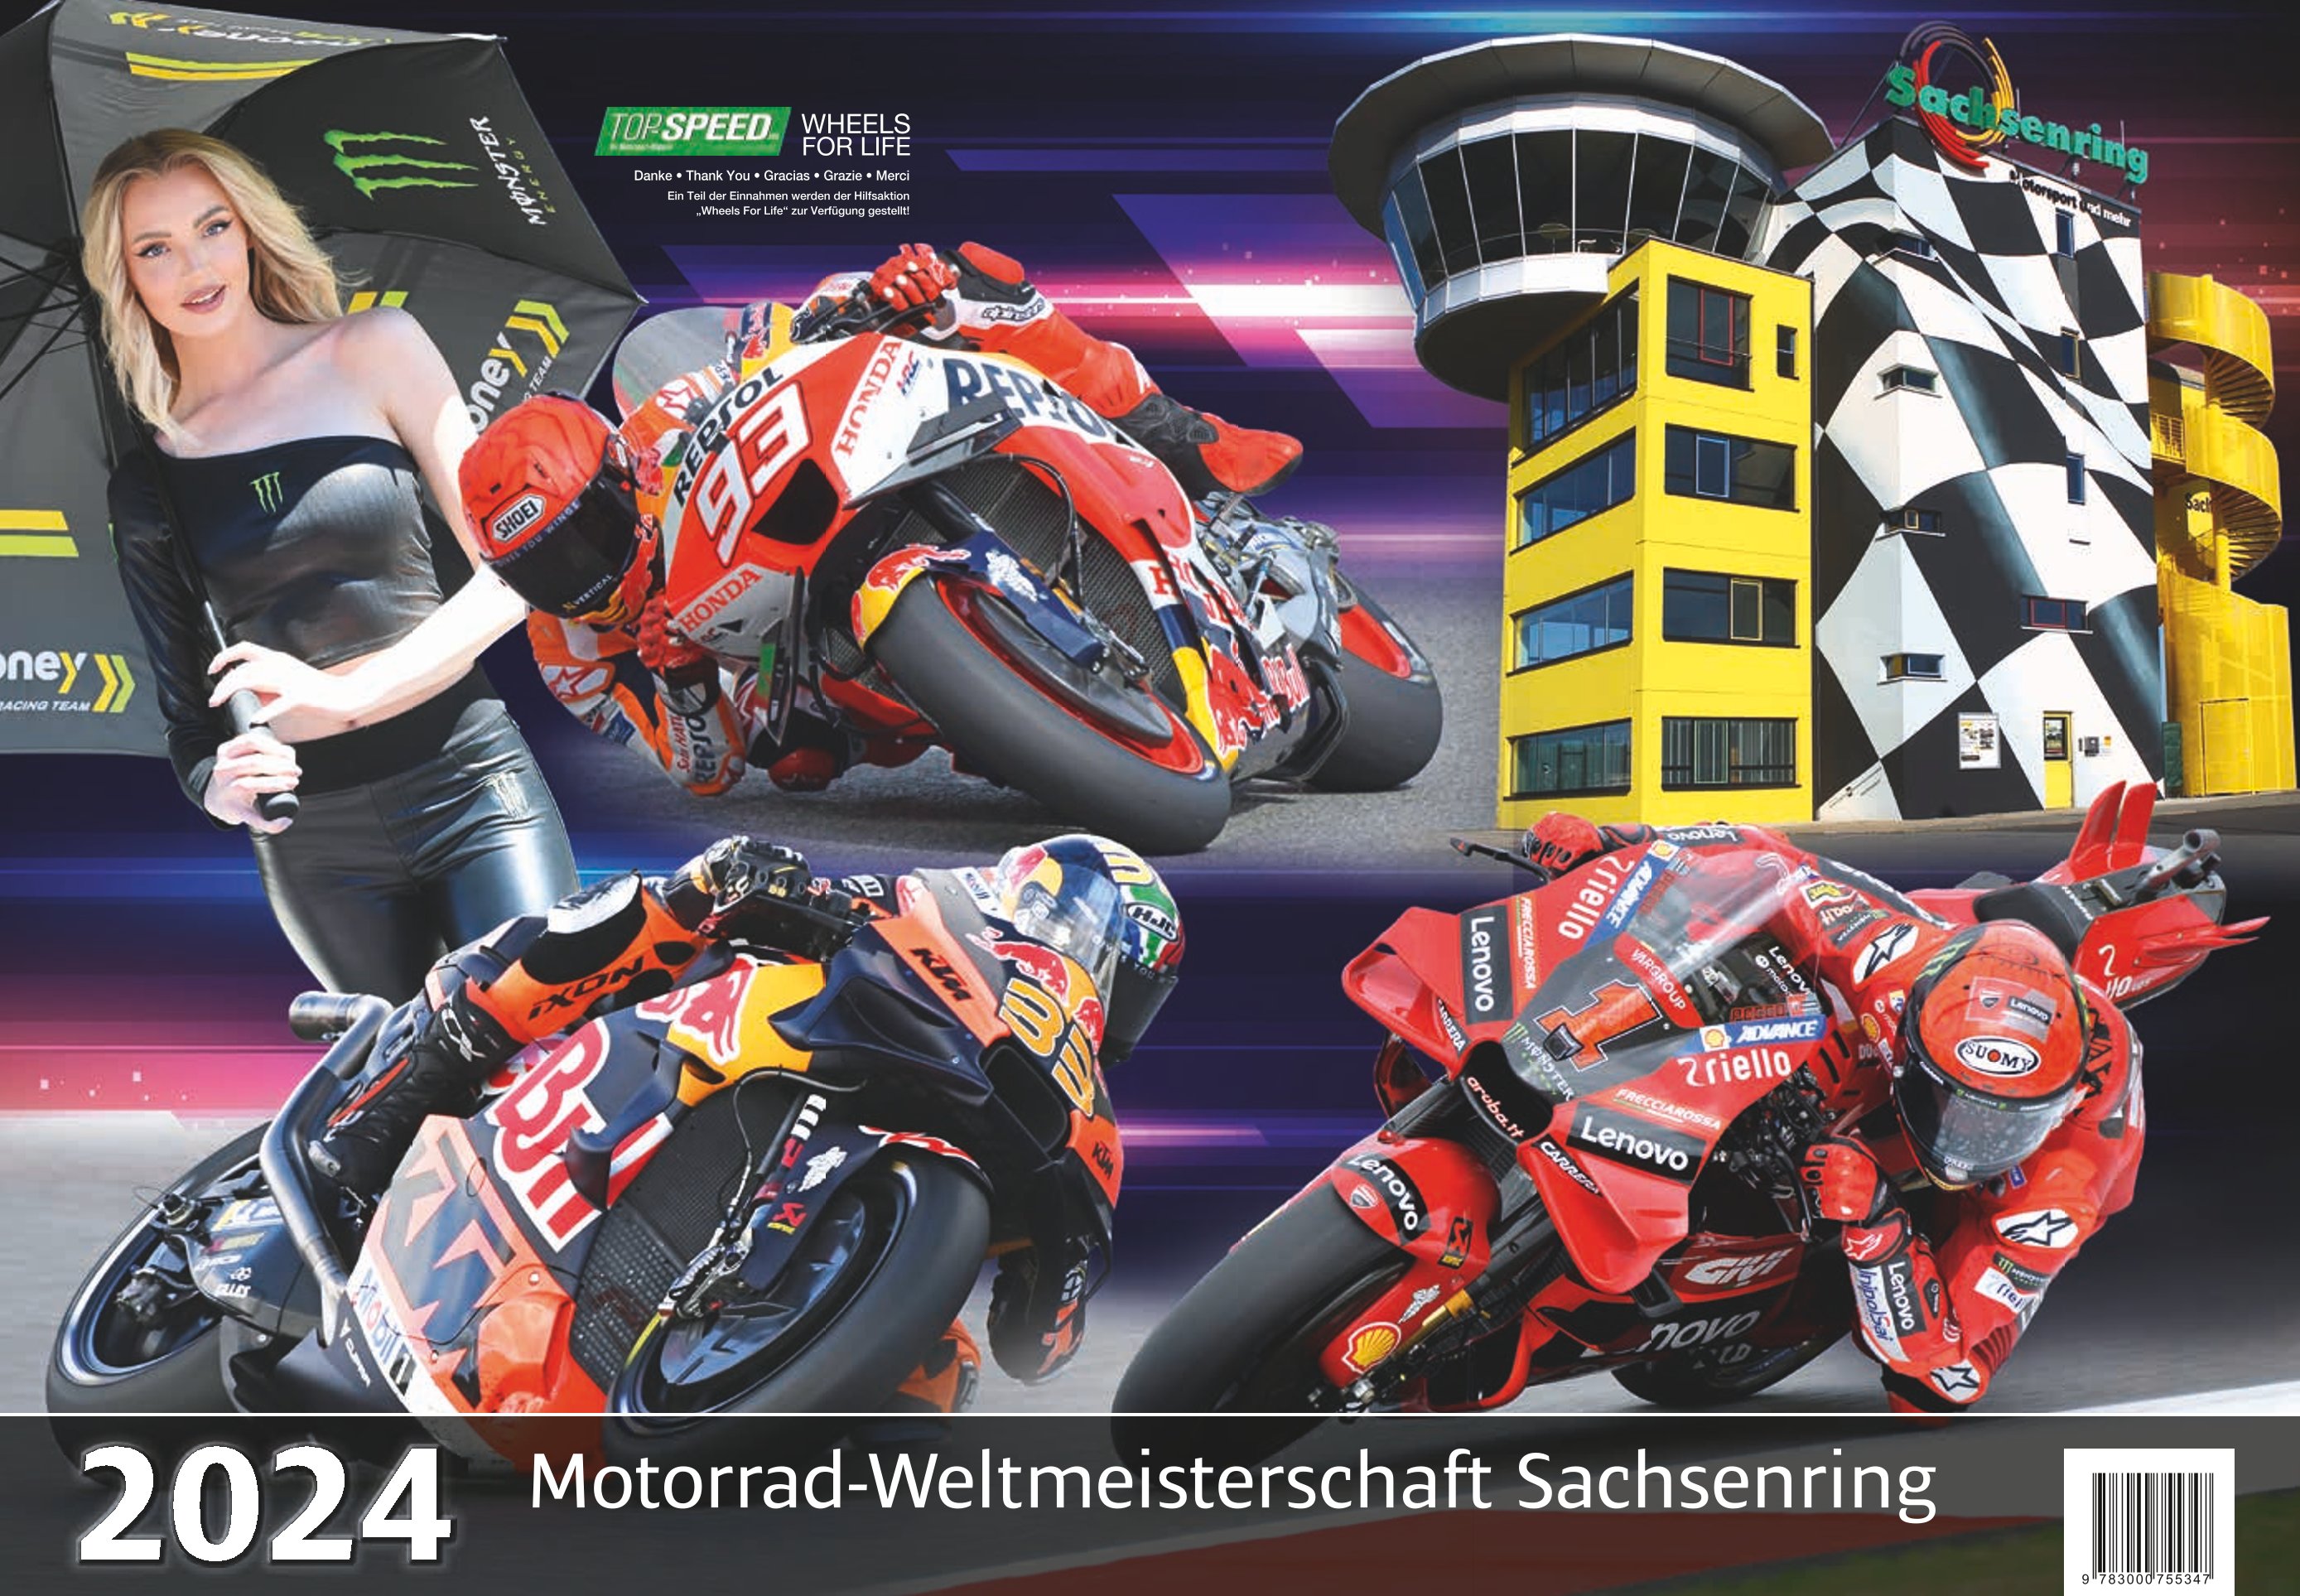 Kalender 2024 "Motorrad-Weltmeisterschaft Sachsenring"